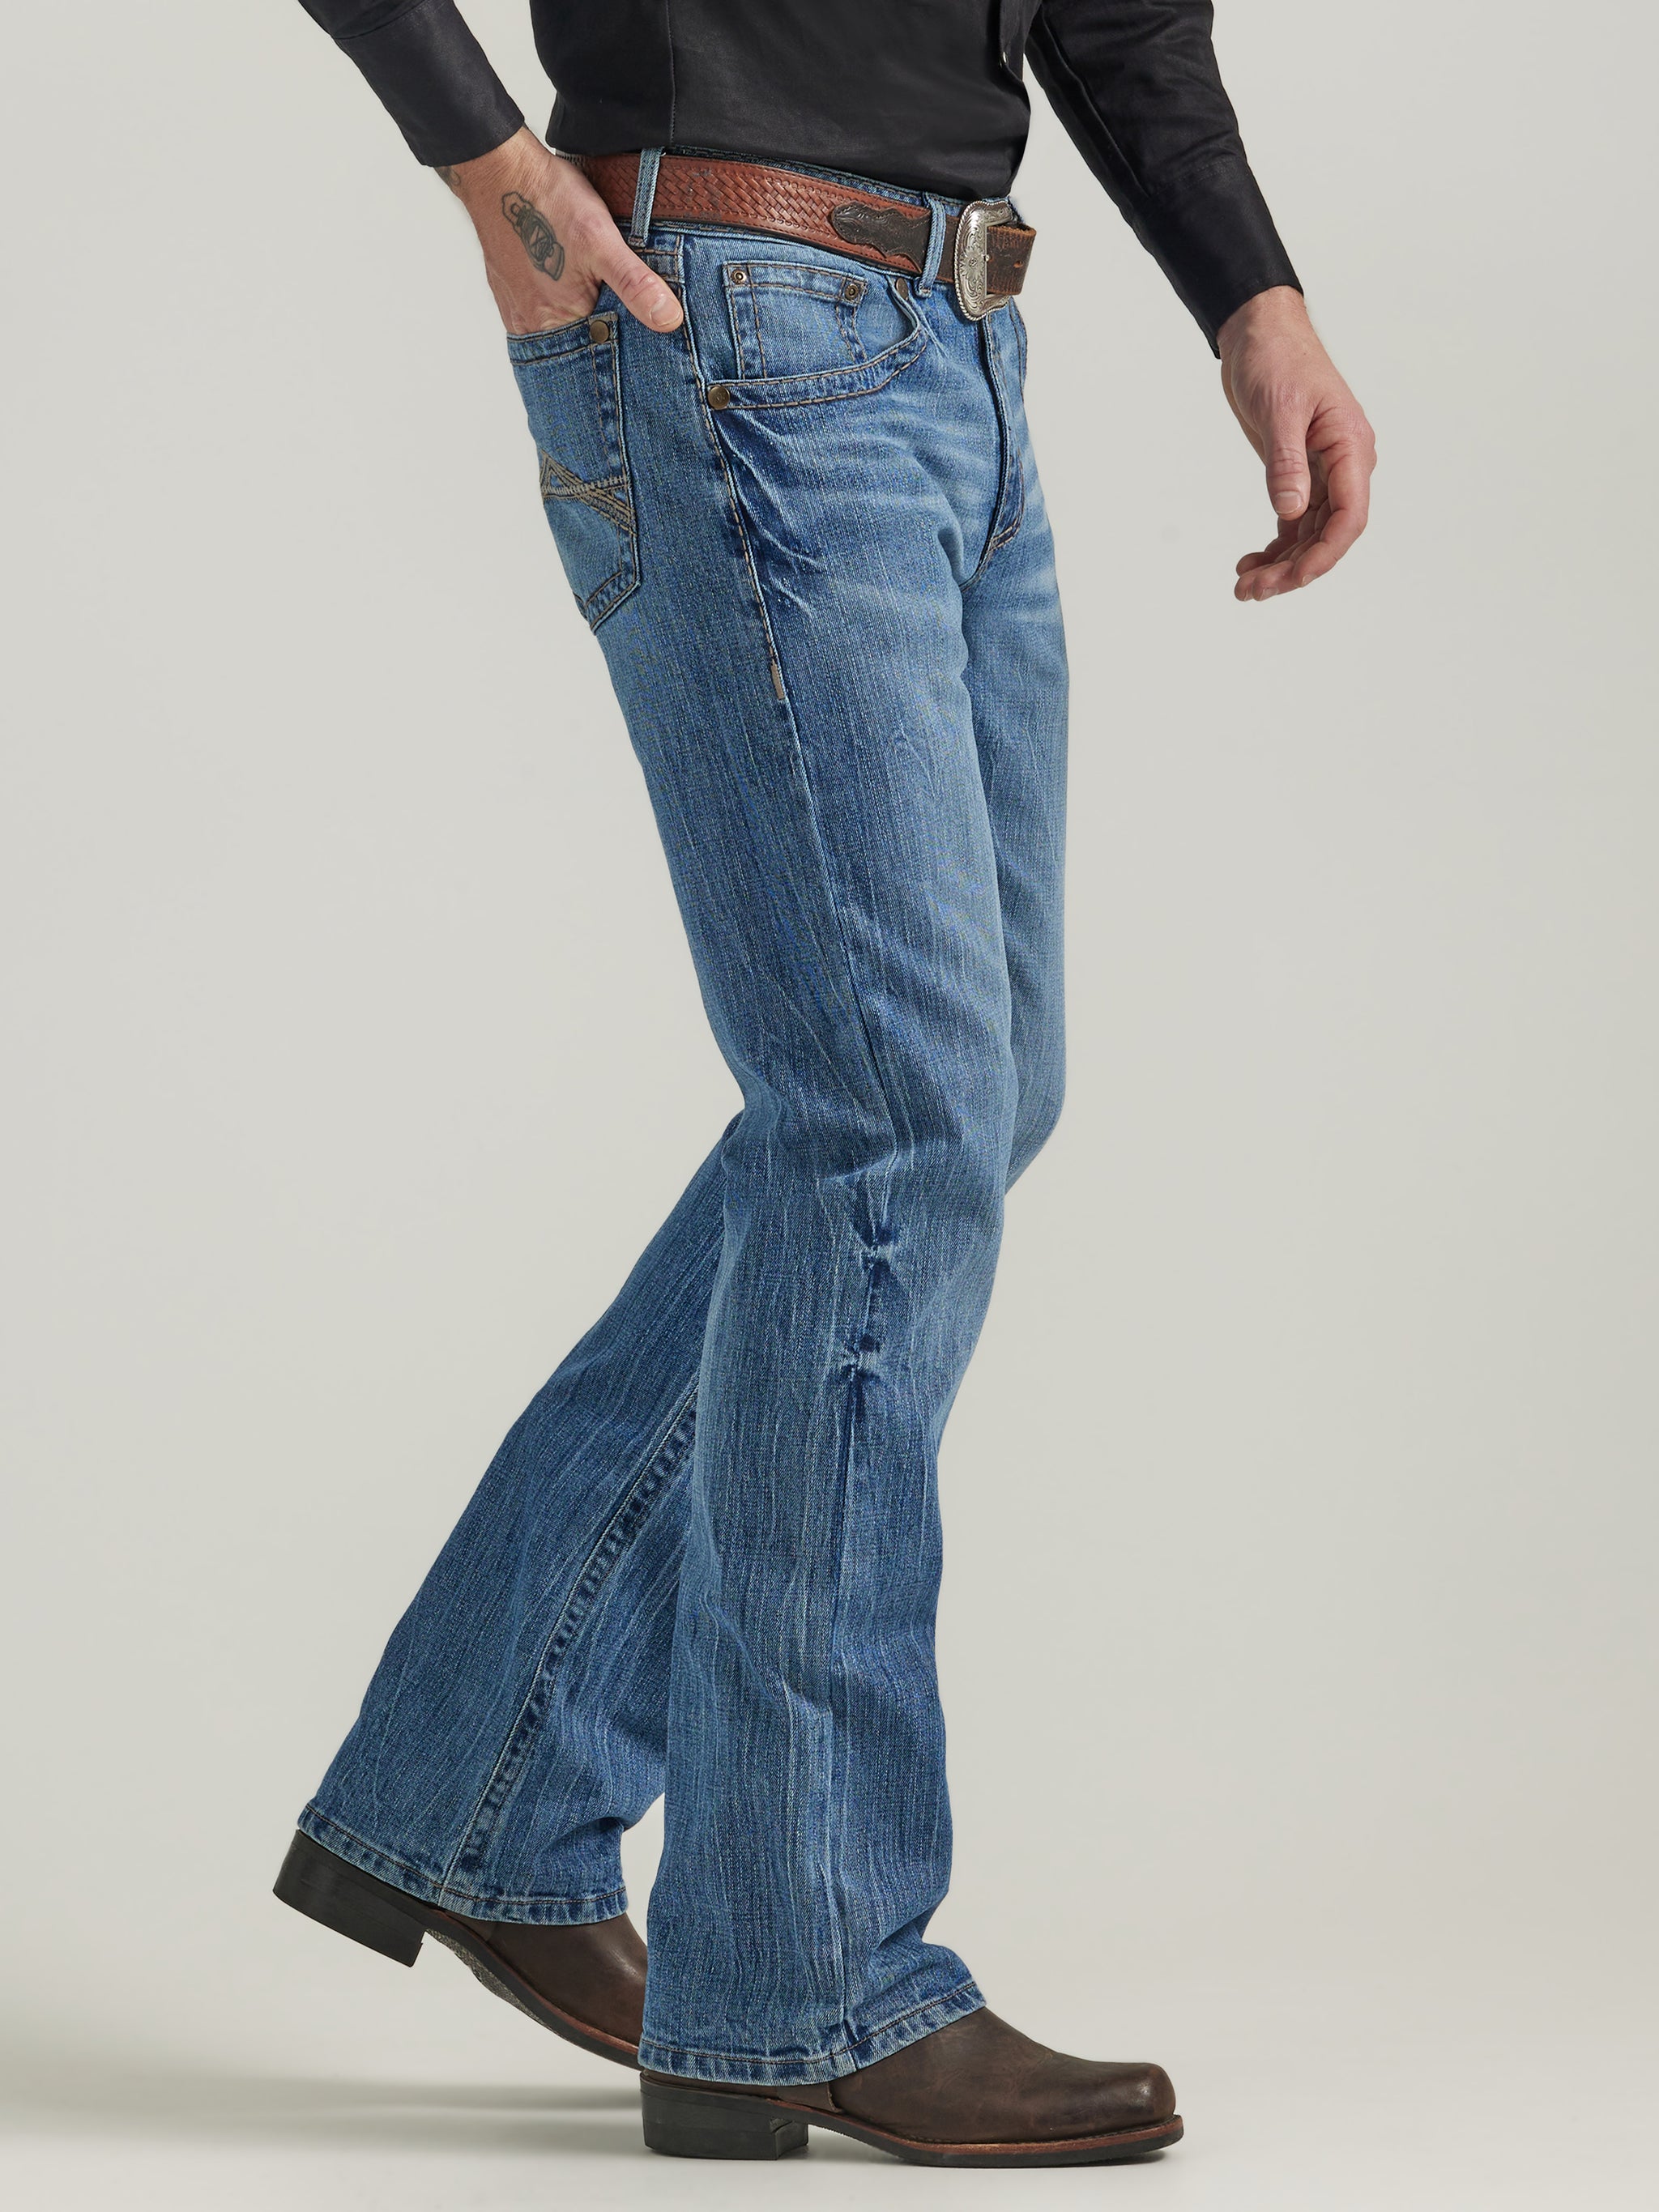 Wrangler Men's Texas Authentic Slim Fit Jeans - Galaxy